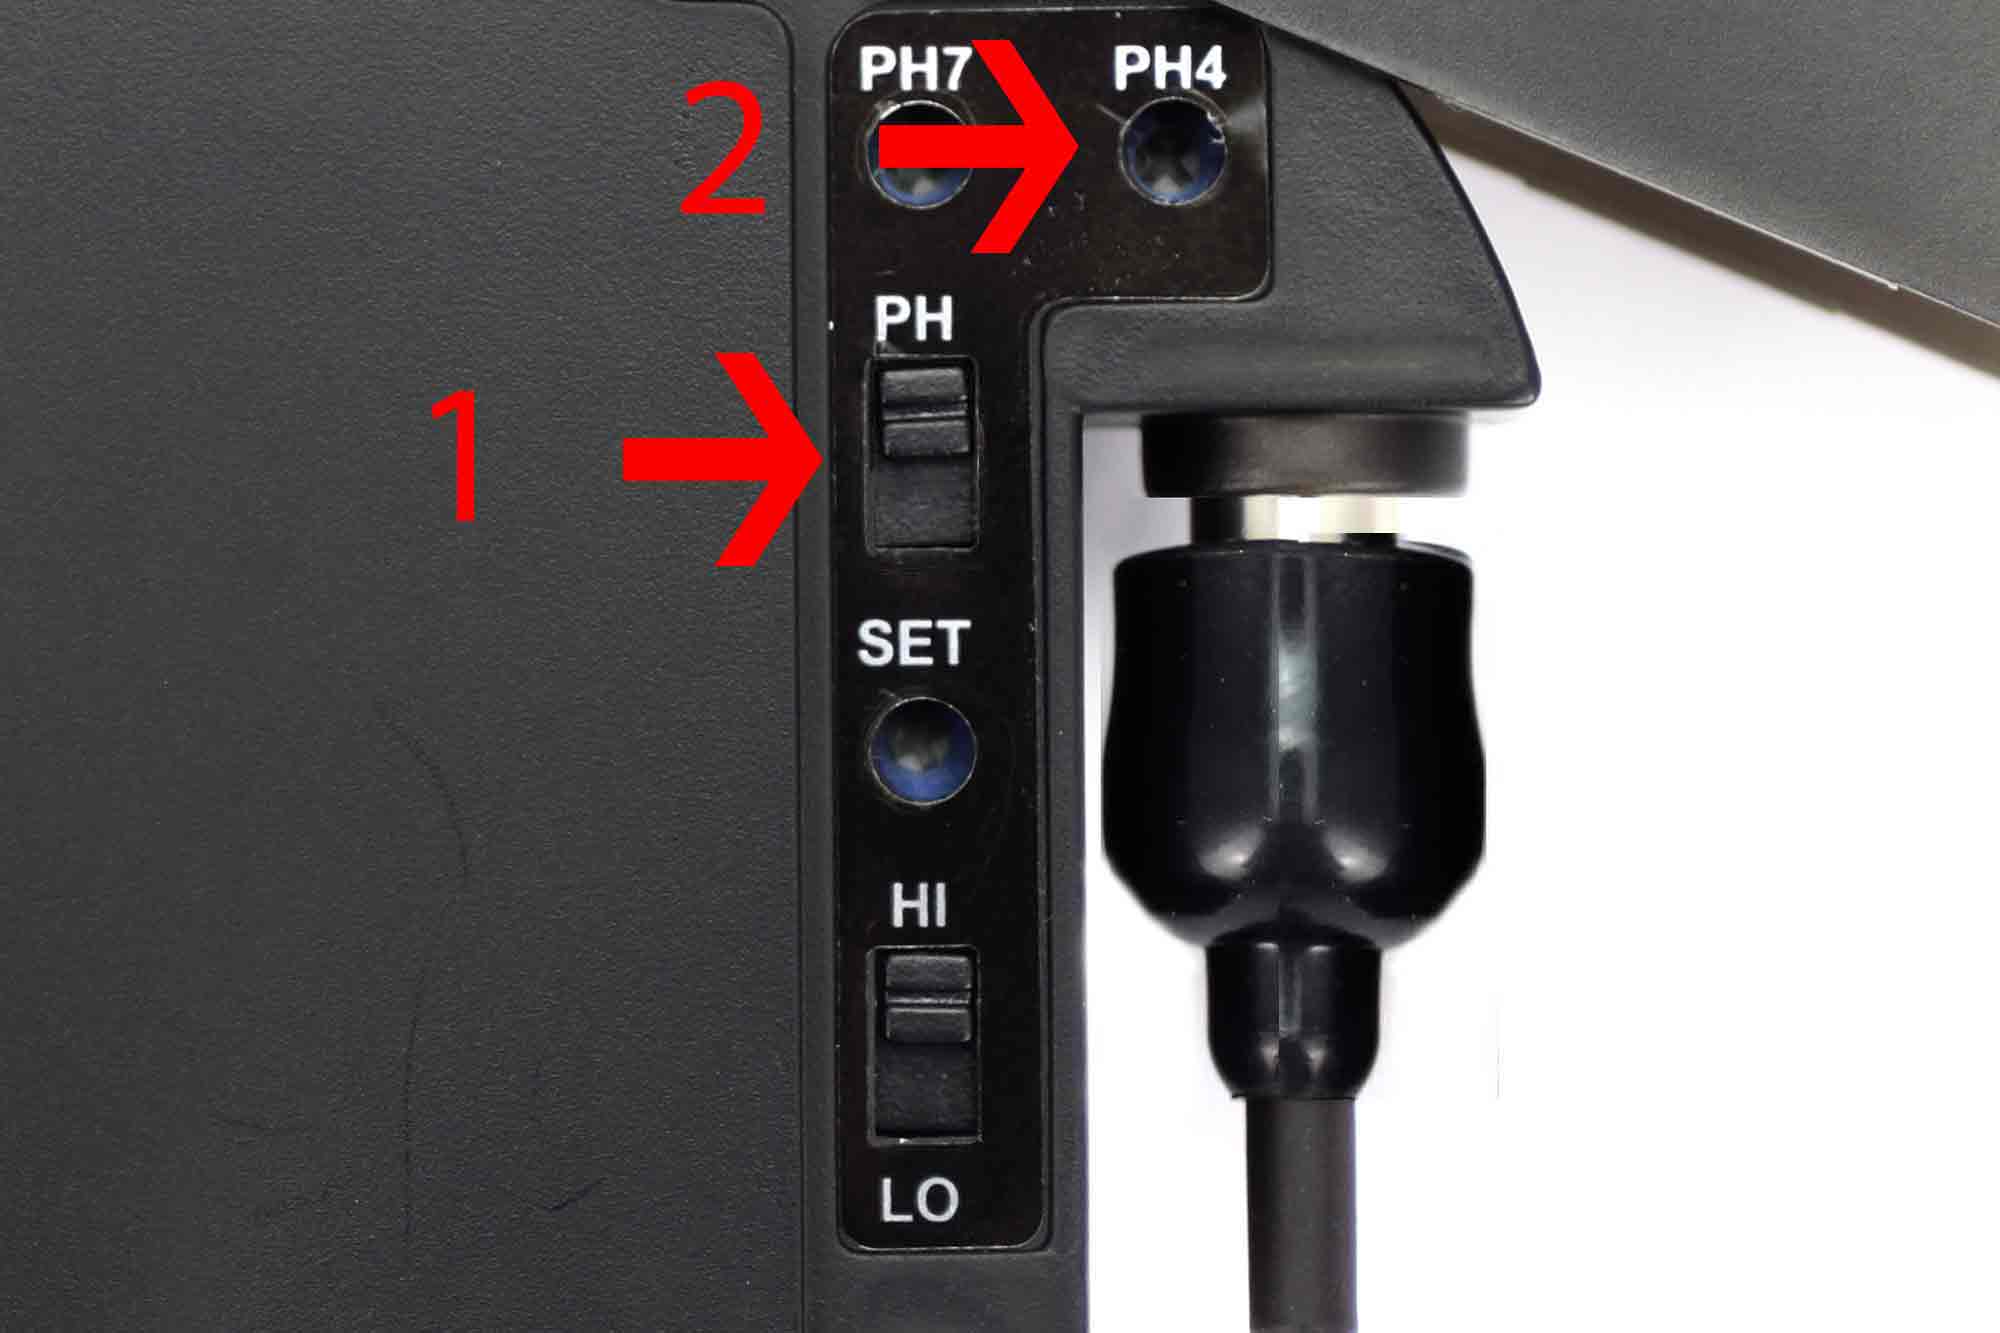 Ajuste el controlador a pH 4